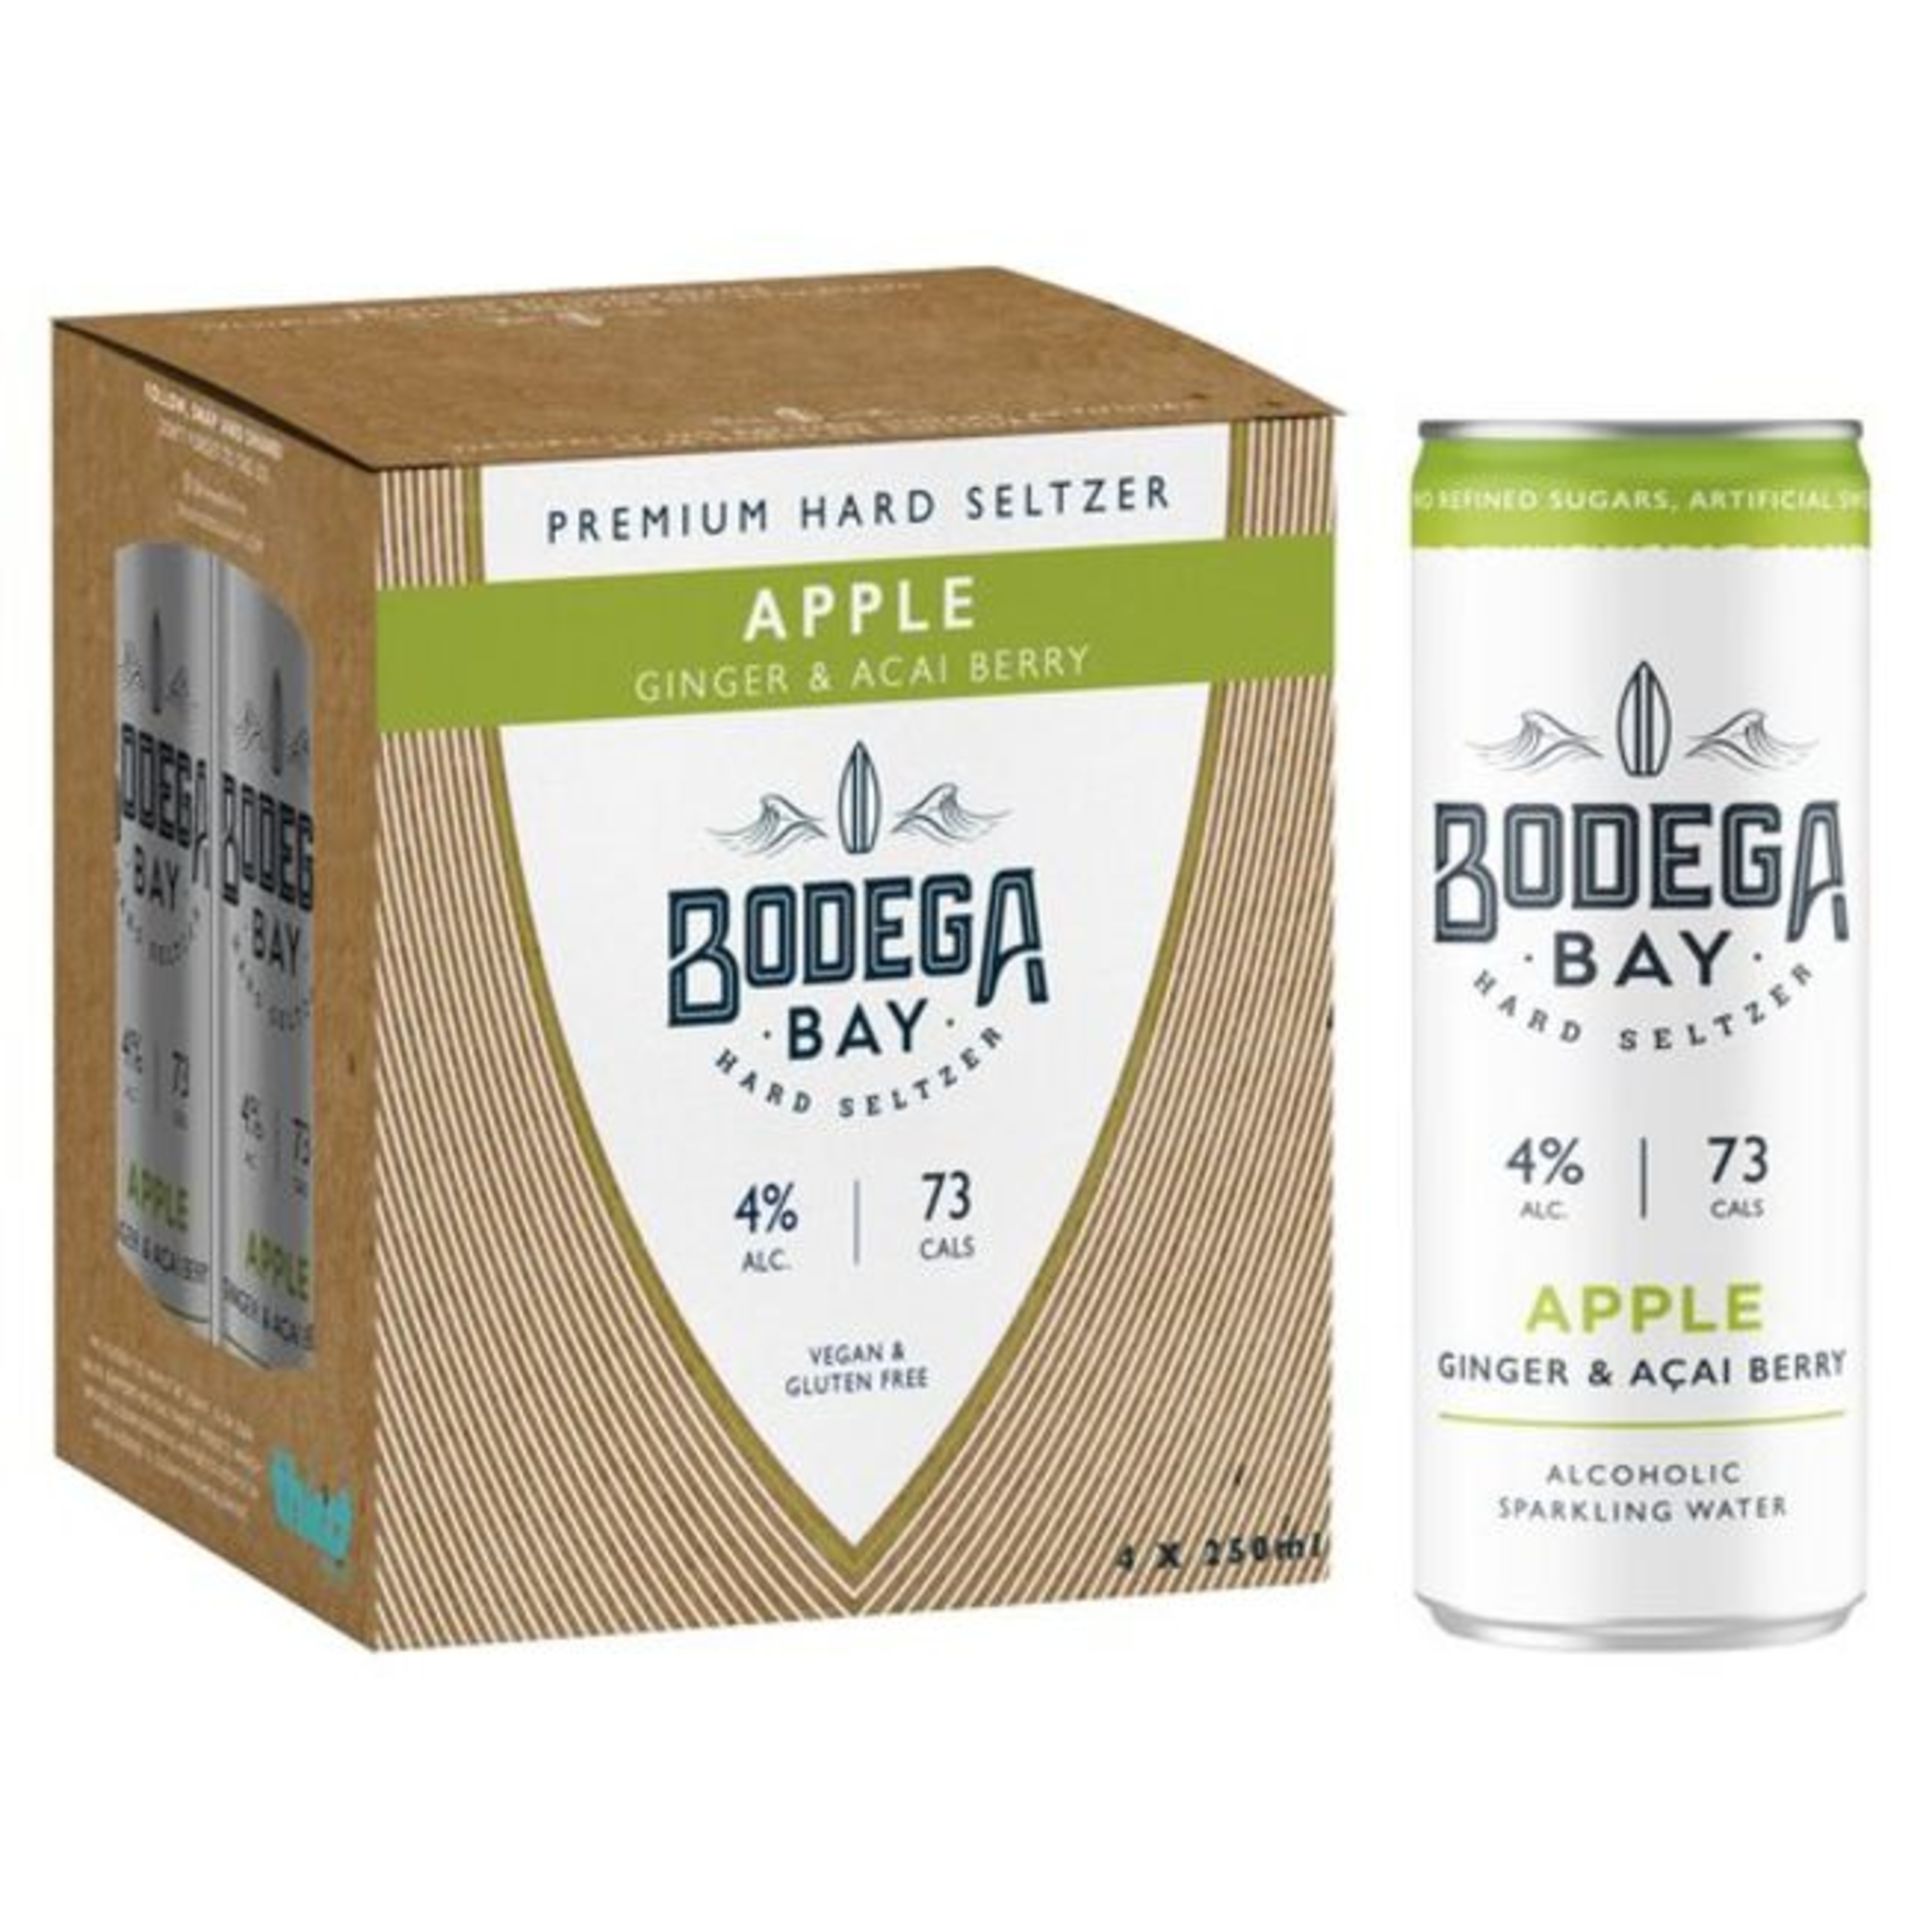 24 x Bodega Bay Hard Seltzer 250ml Alcoholic Sparkling Water Drinks - Apple Ginger & Acai Berry - Image 8 of 9